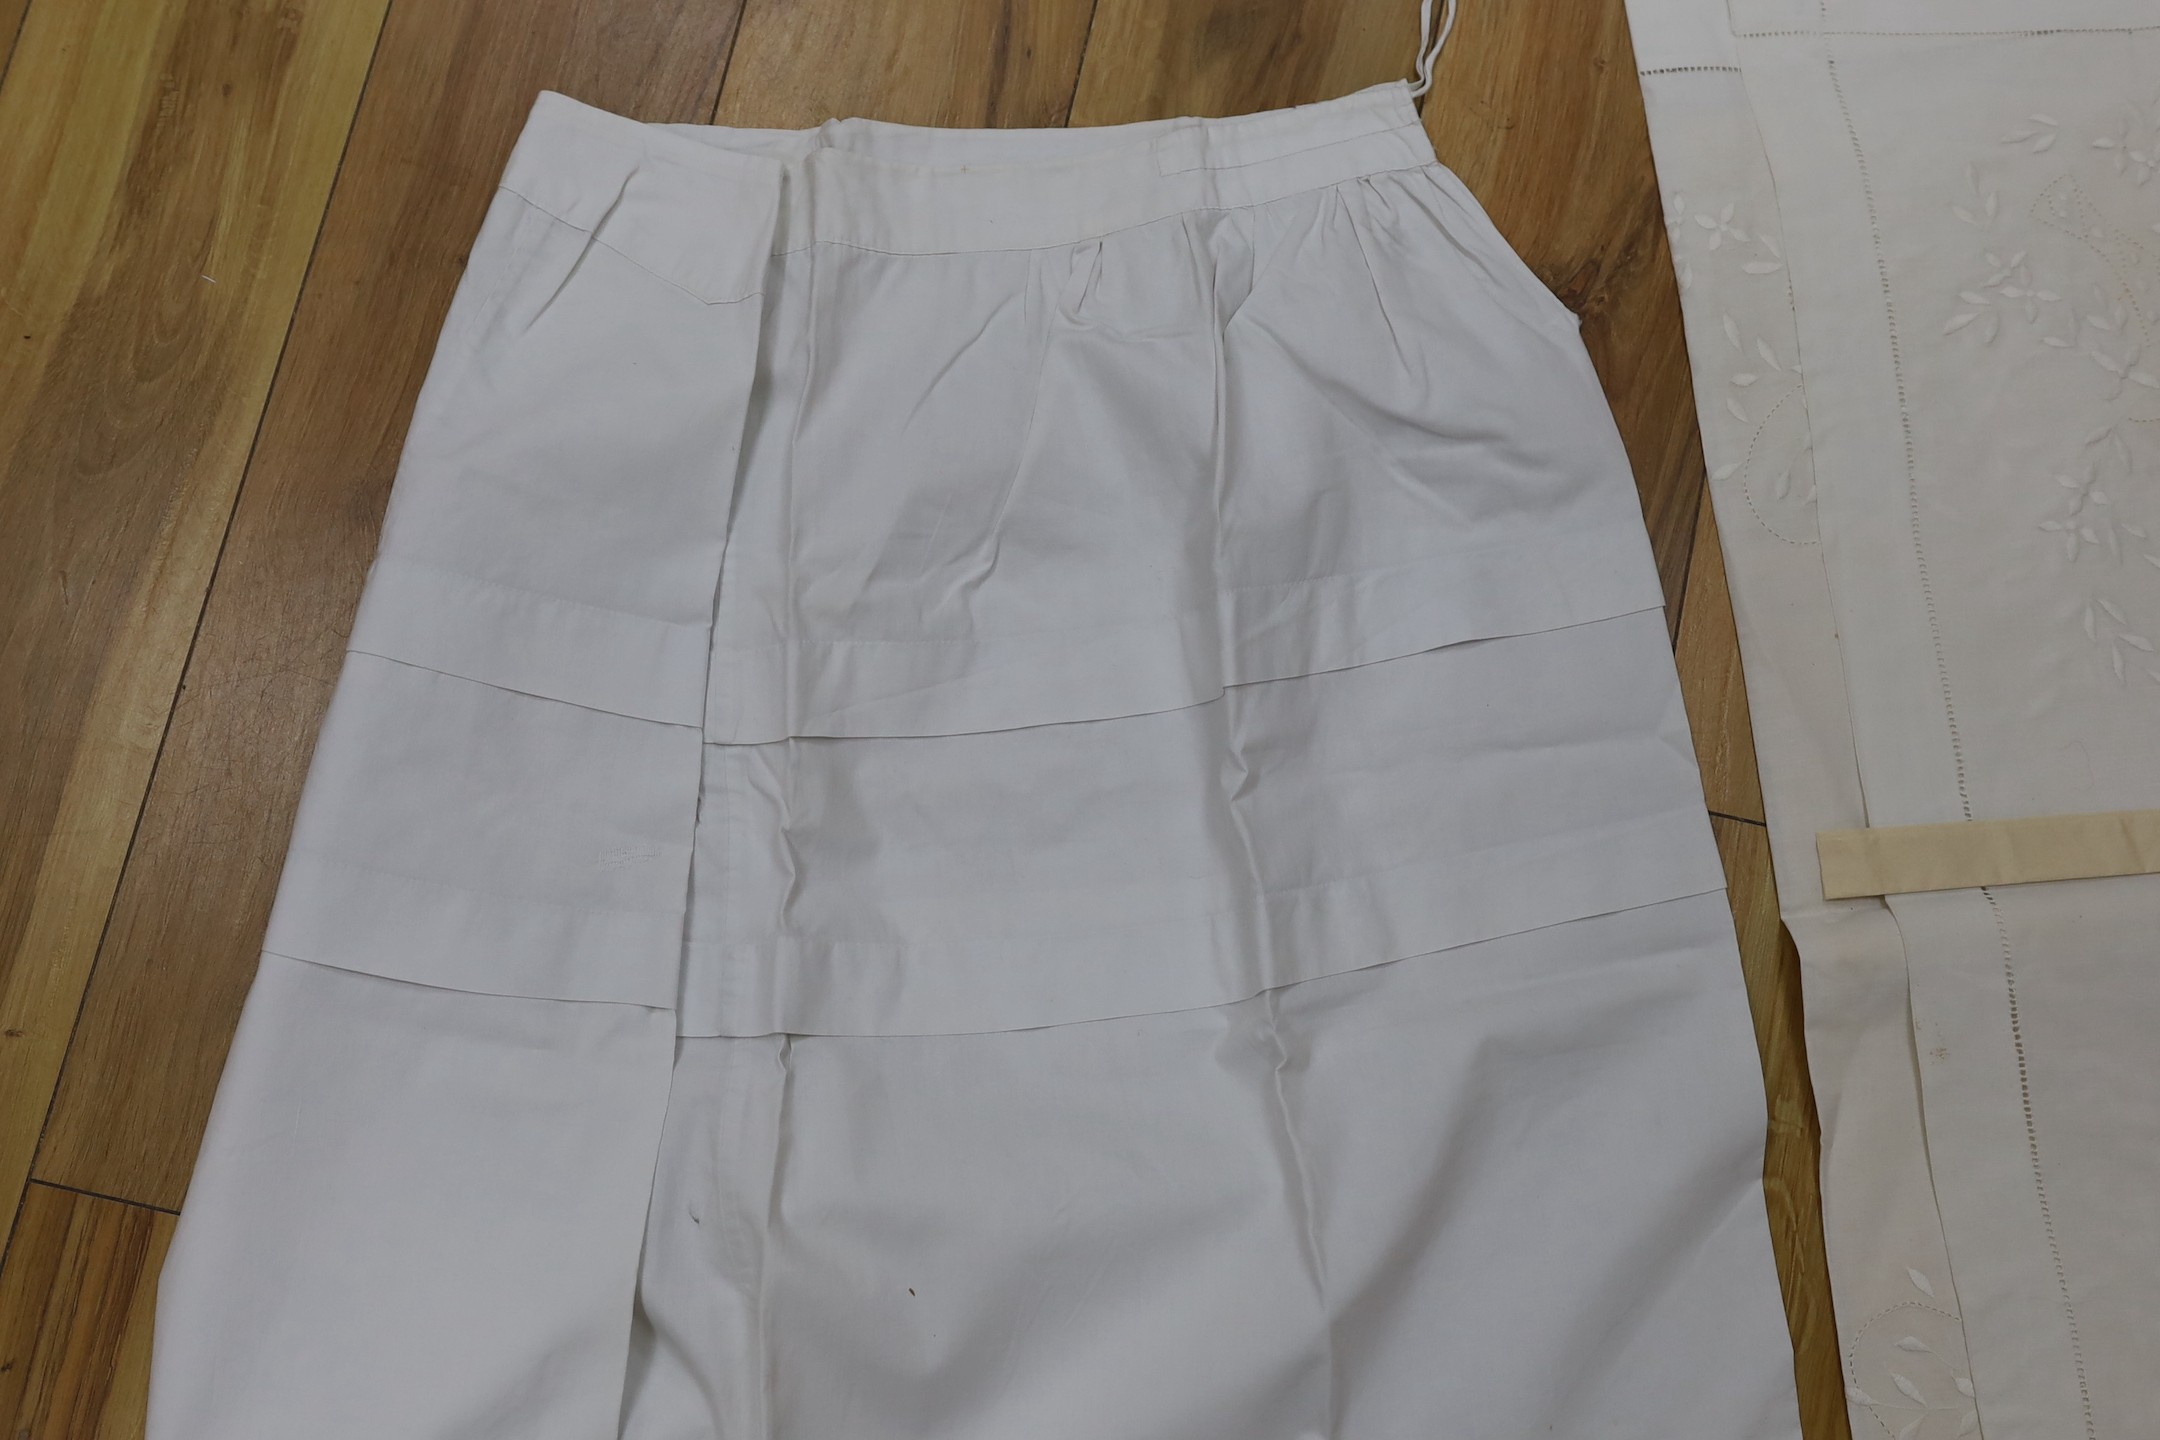 A selection of Edwardian linen undergarments